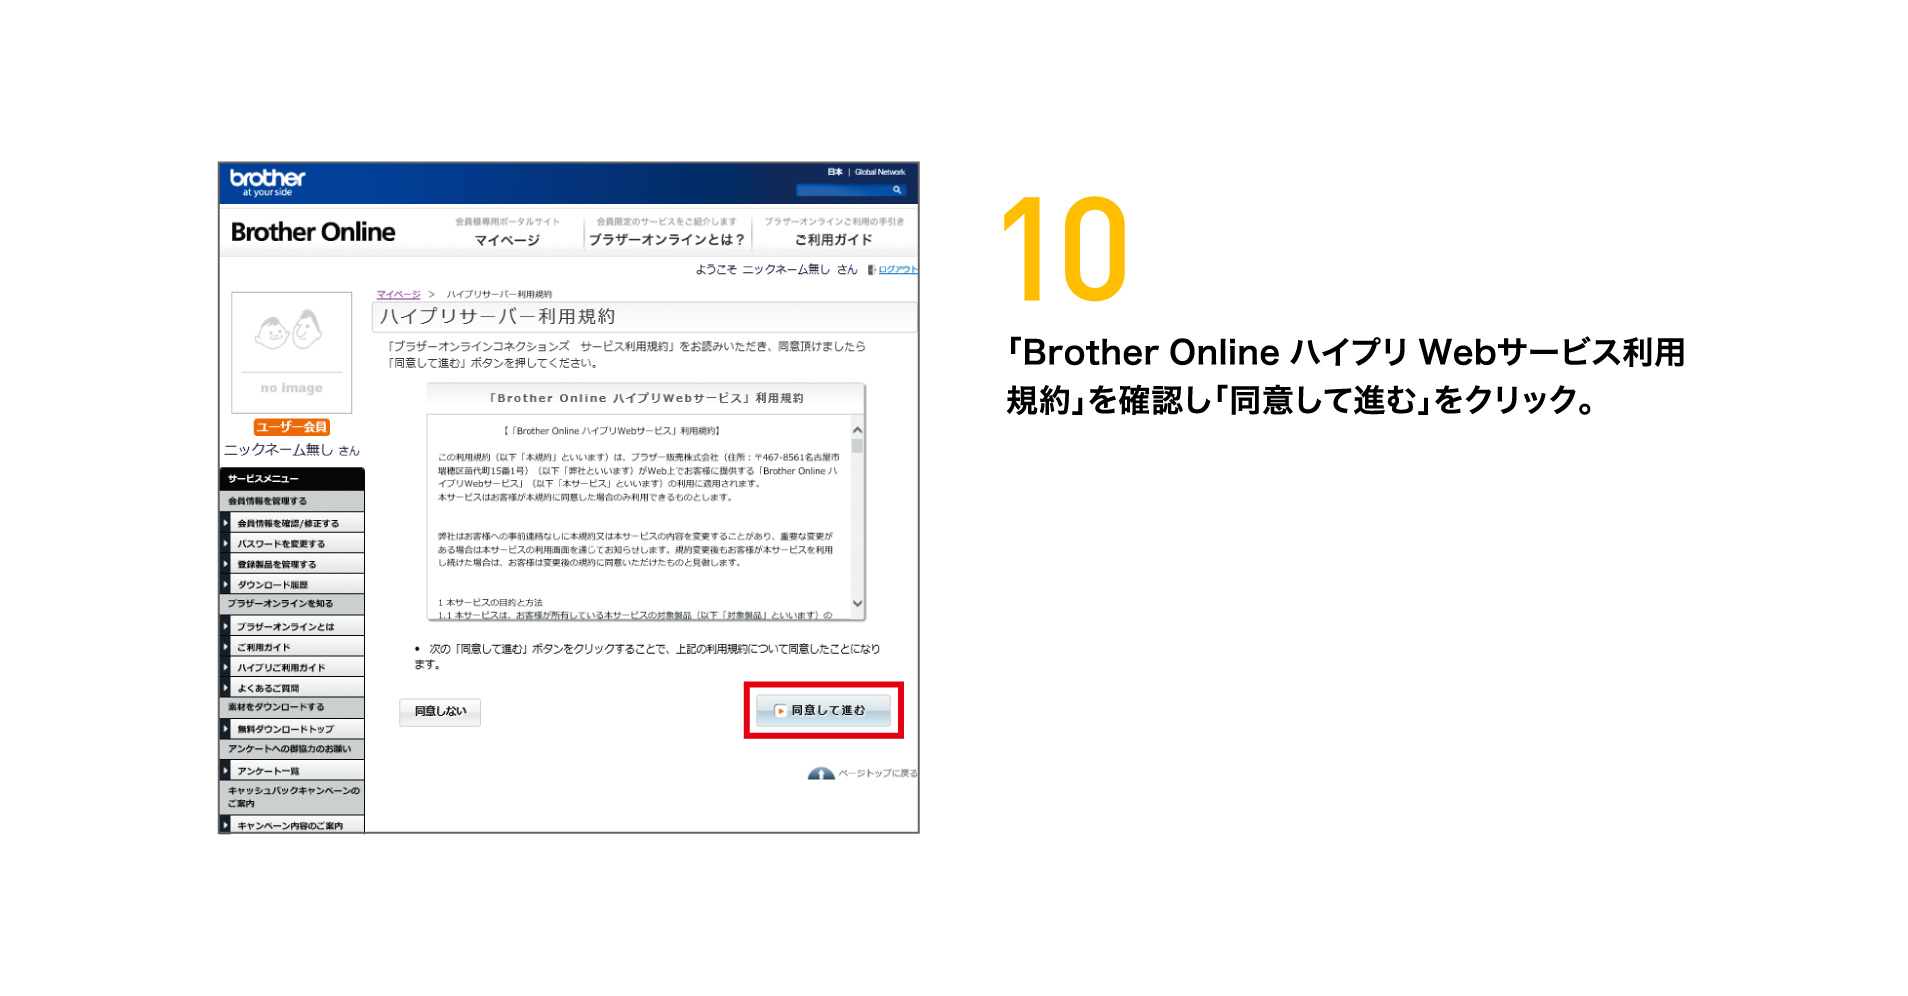 10 「Brother Online ハイプリ Webサービス利用規約」を確認し「同意して進む」をクリック。